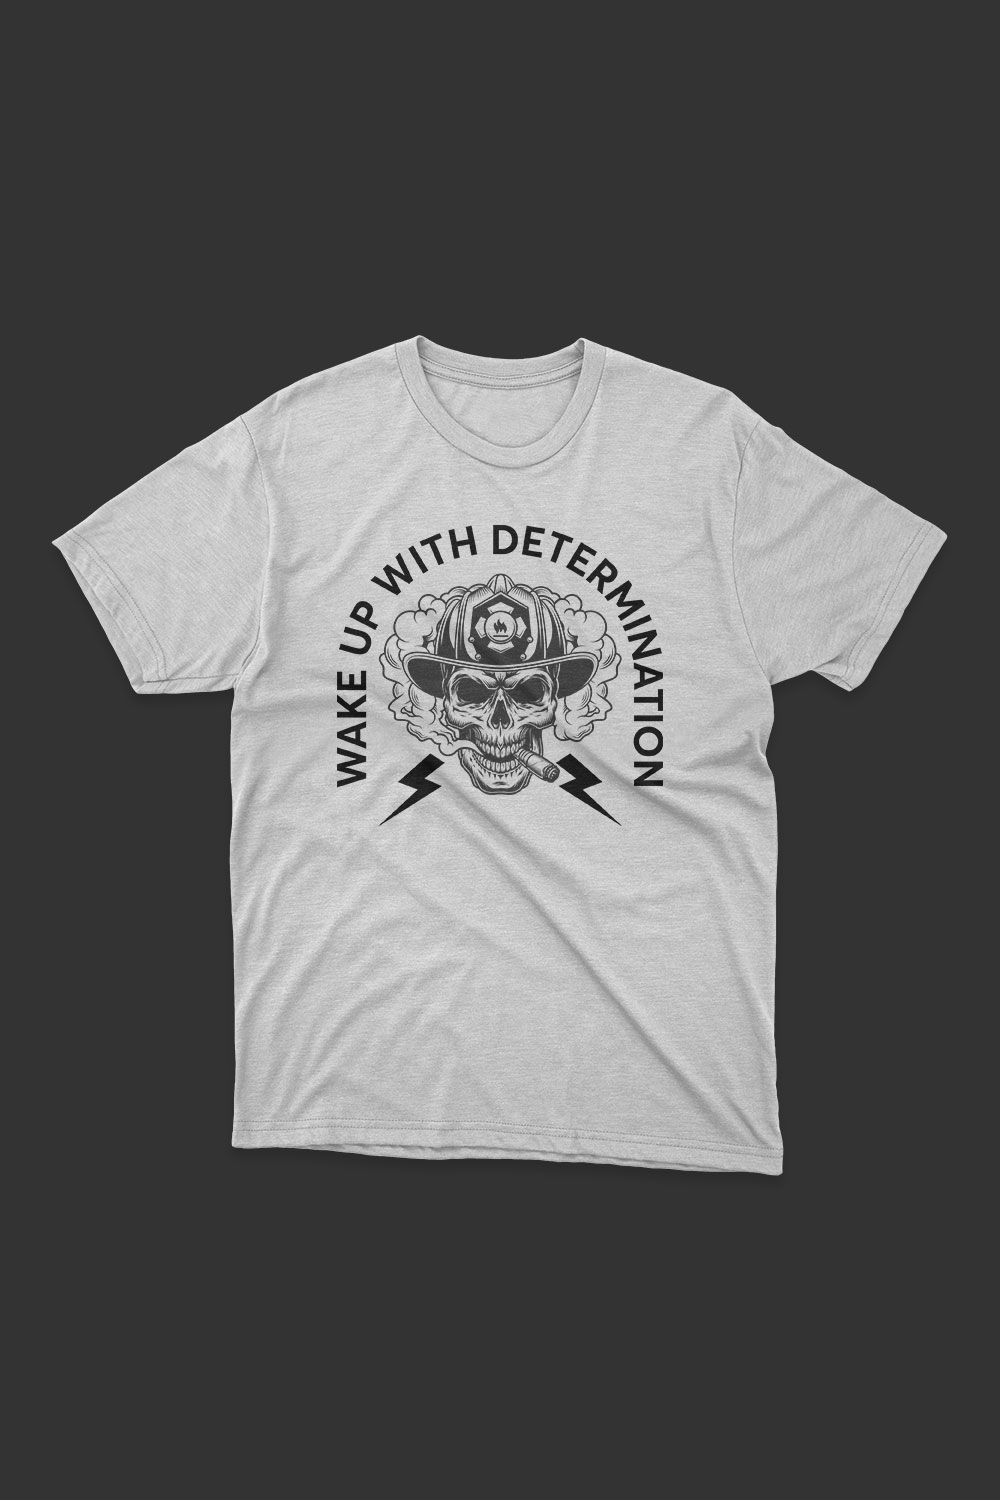 Skull Smoking T Shirt Design pinterest preview image.